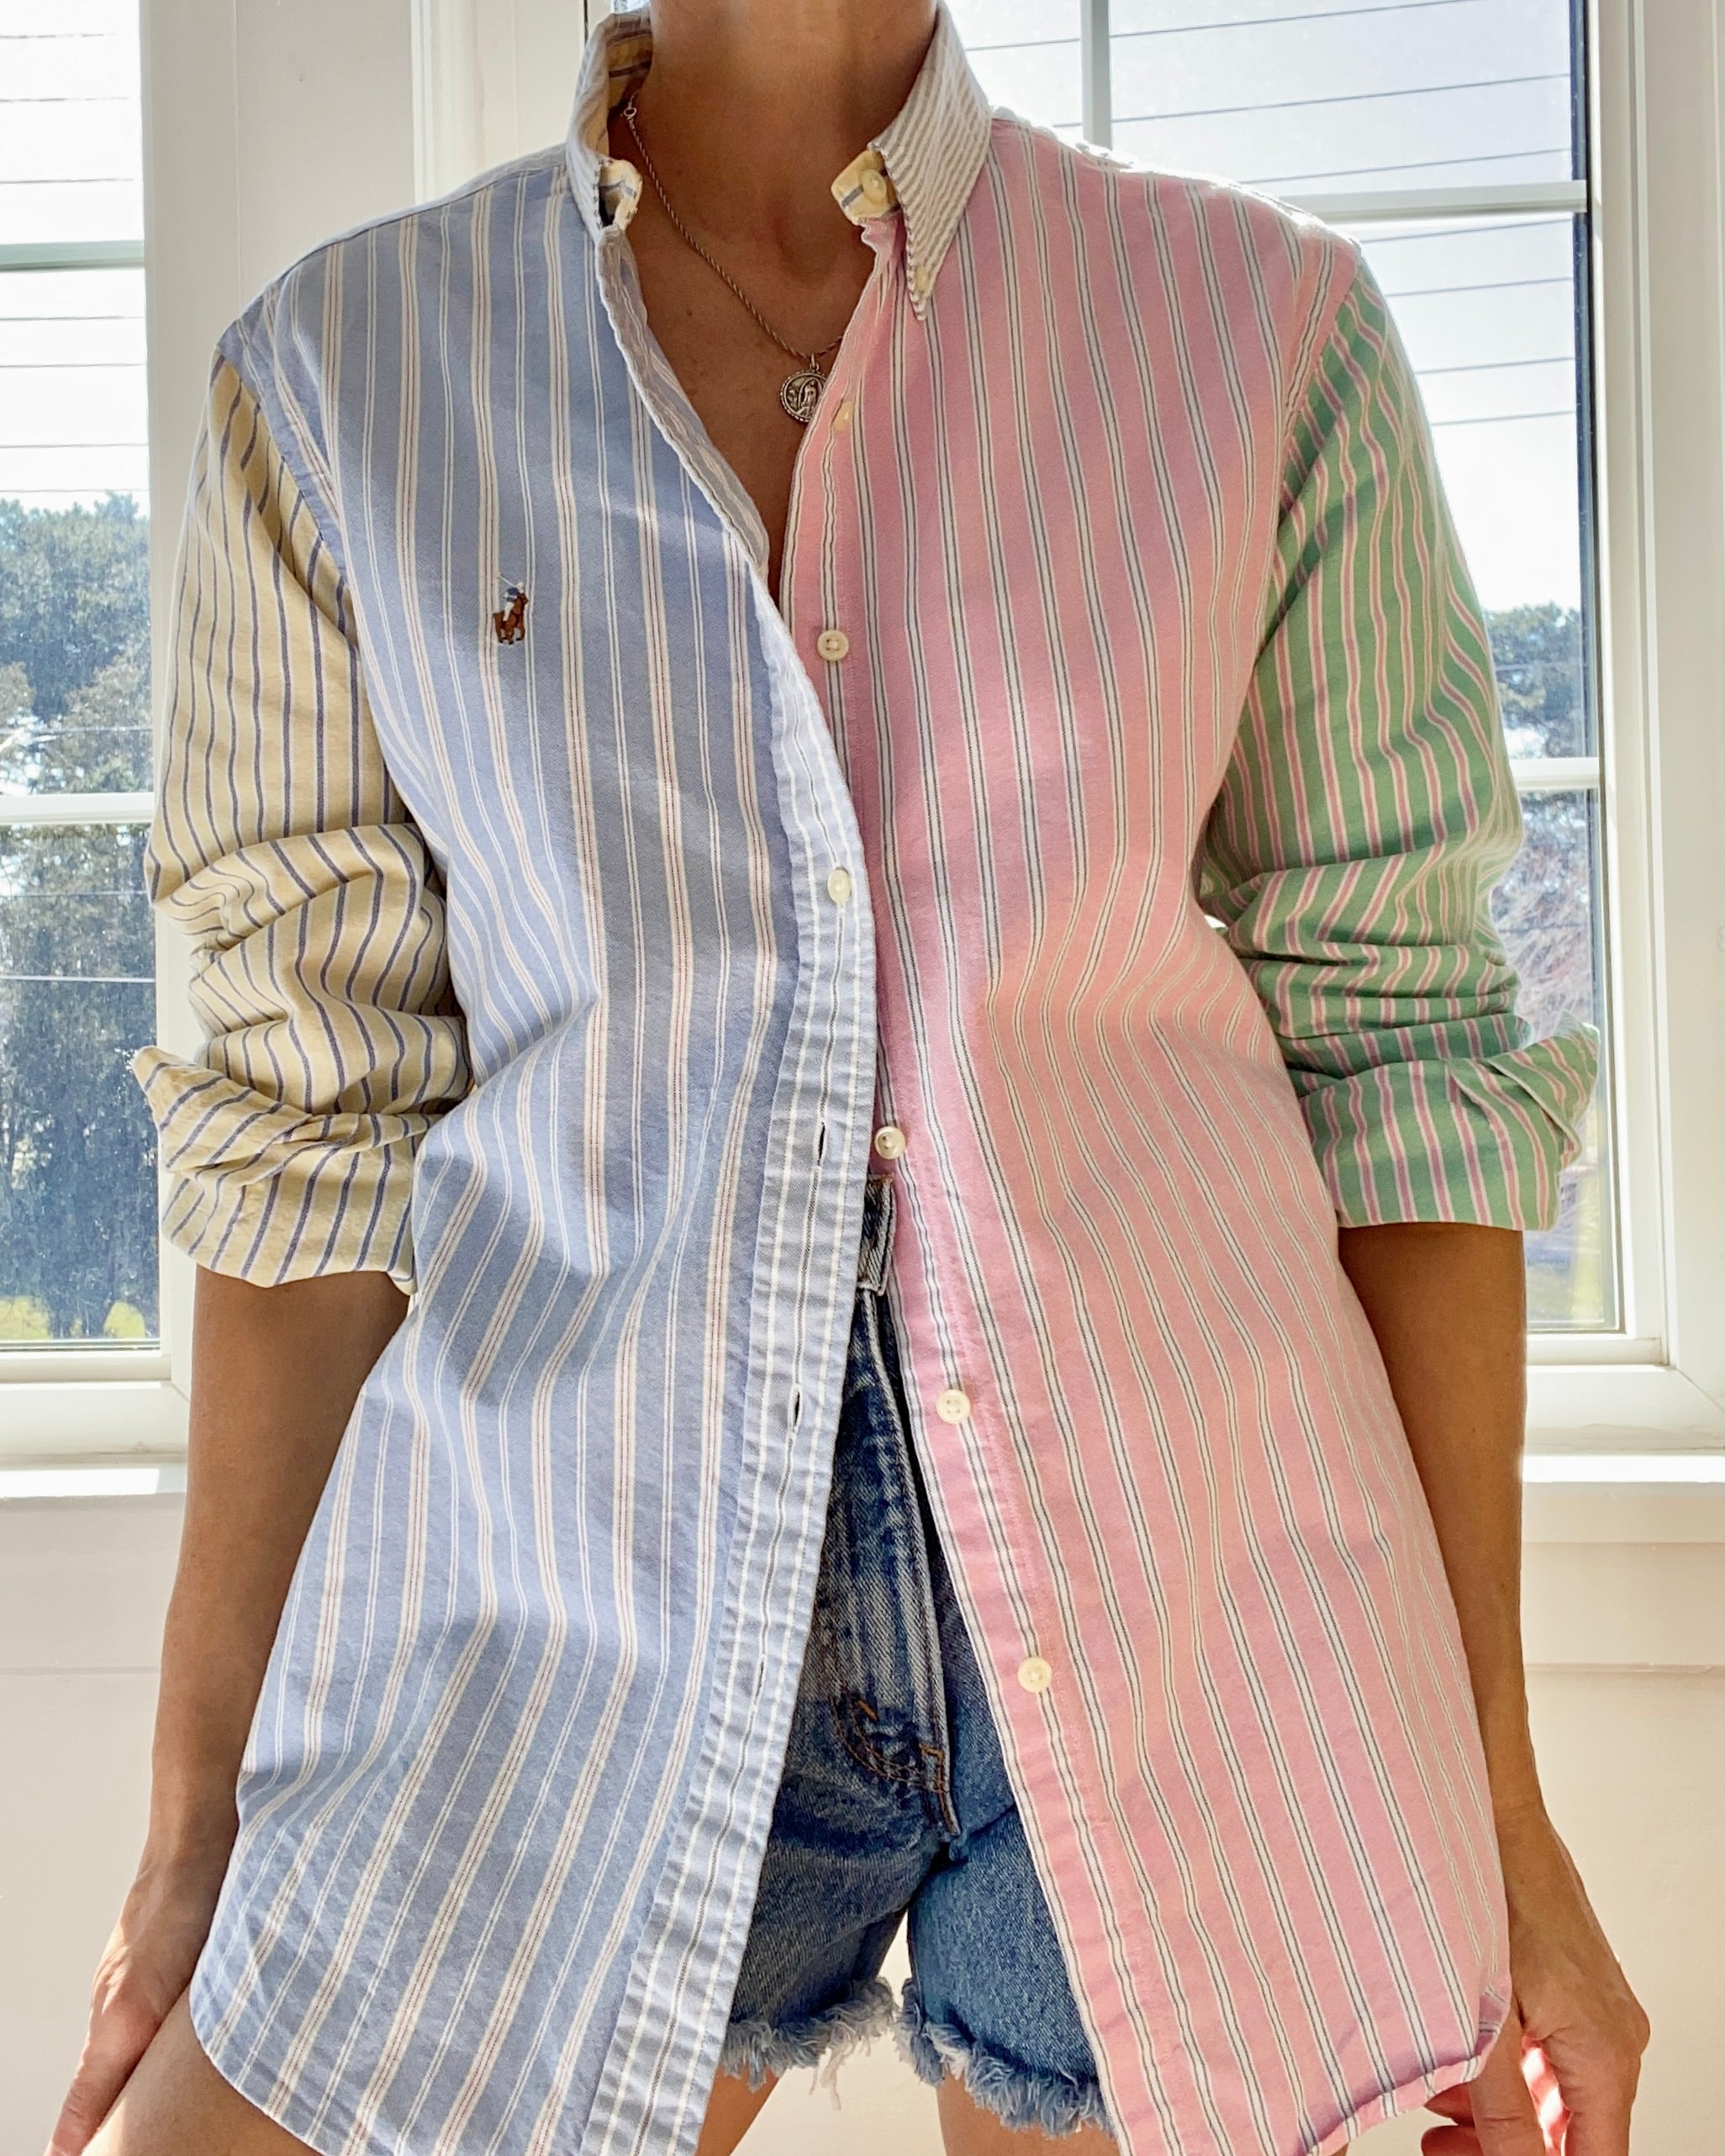 Vintage Ralph Lauren Mens Oxford Multi Stripe Shirt